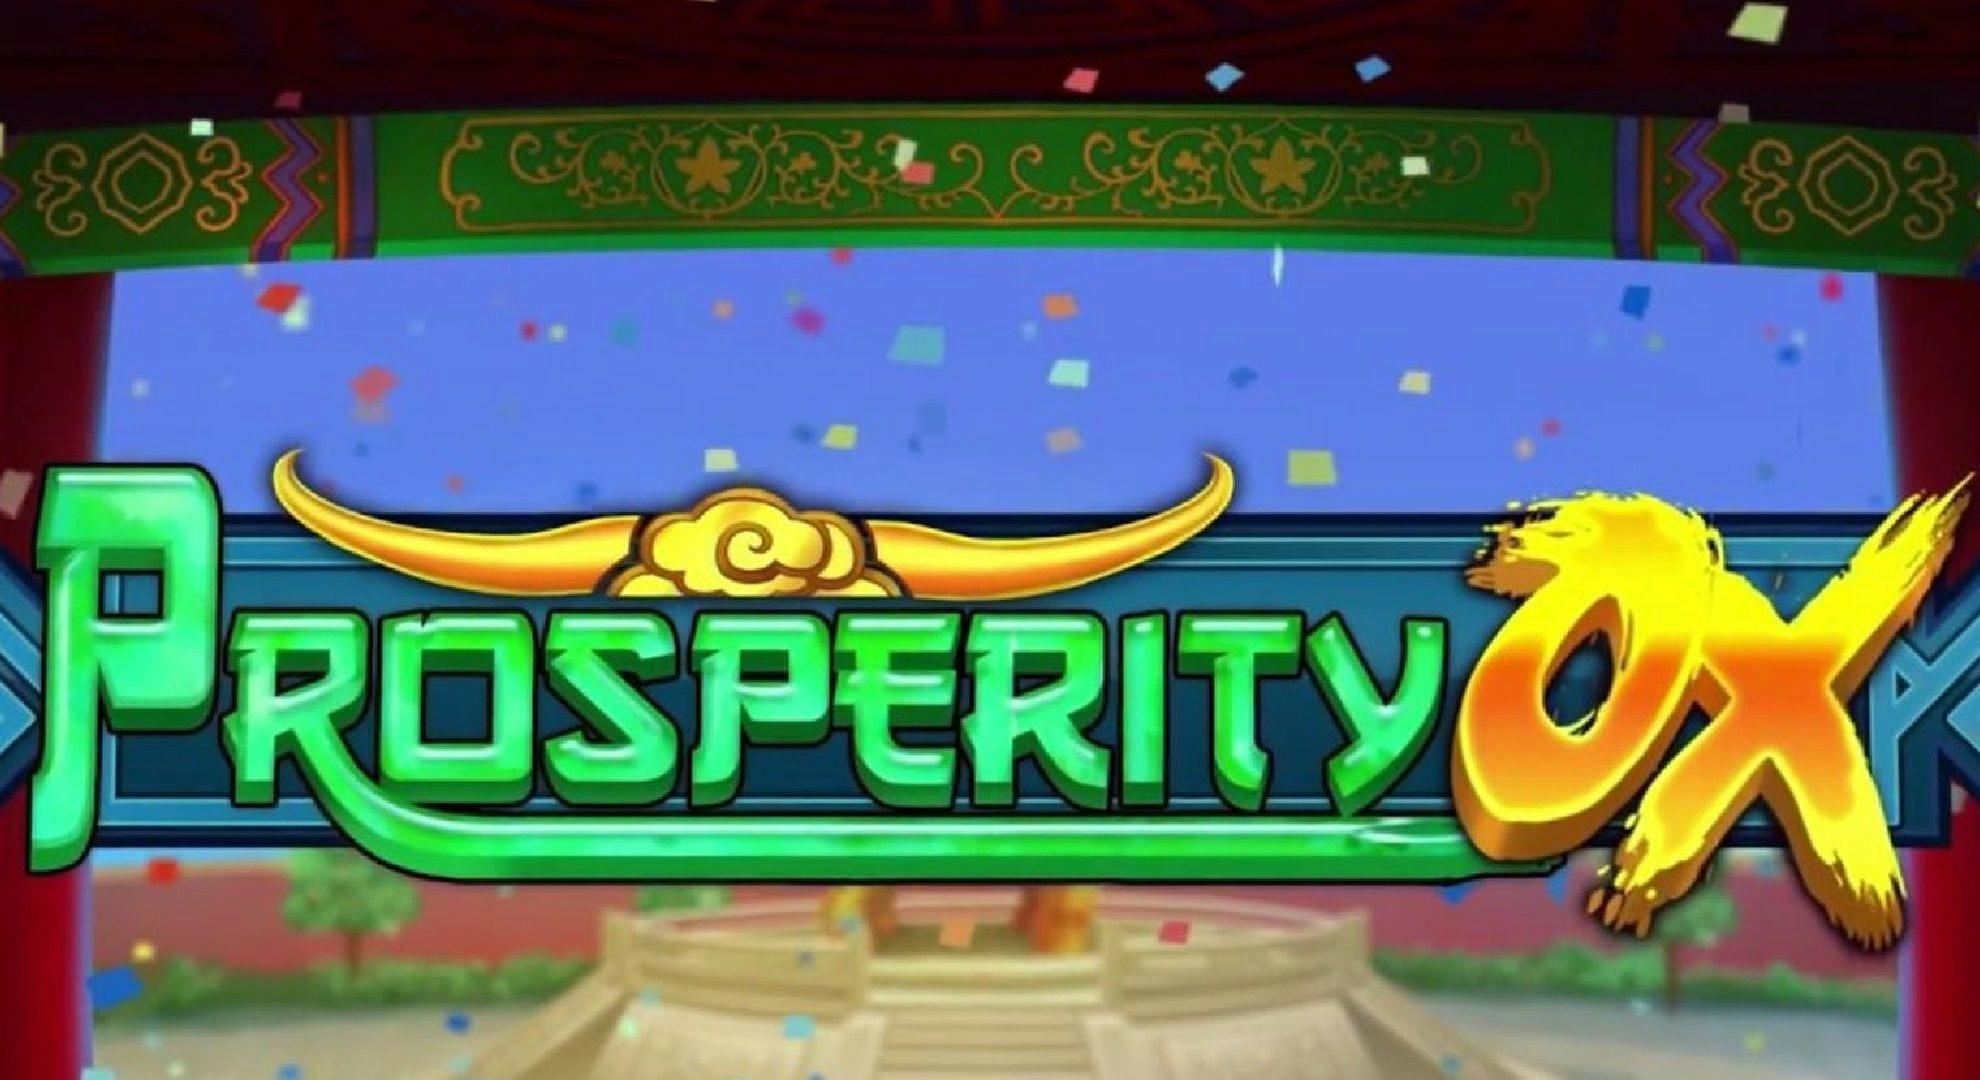 Prosperity Ox Slot Online Free Play